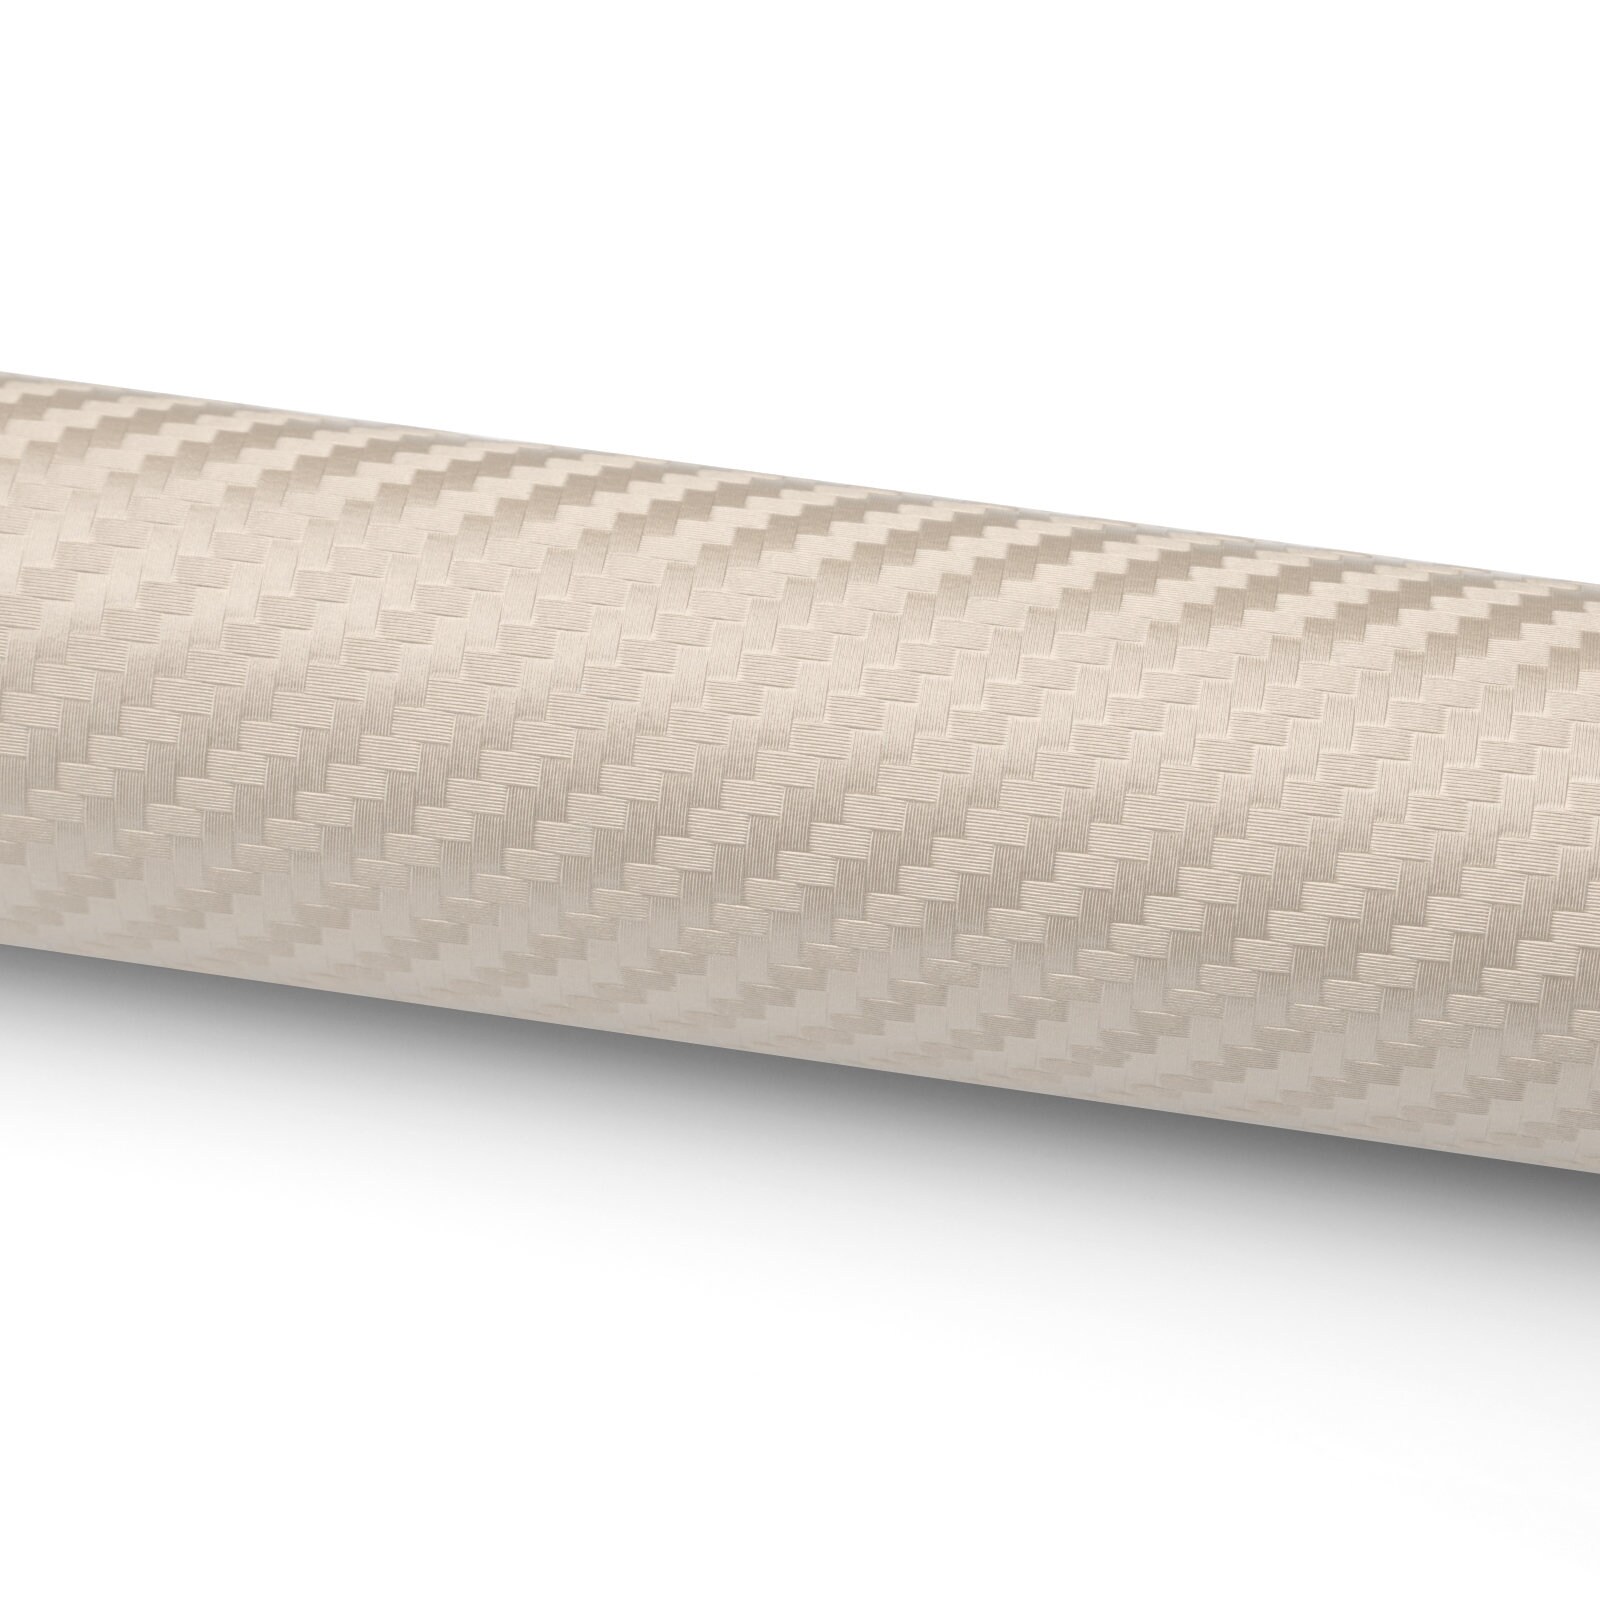  Tela de fibra de carbono/tela de fibra de carbono - Calidad  automotriz/marina premium - Tamaño: 50 x 36 (4.16 x 3.00 pies = 12.50  pies cuadrados - 7.16 oz/sq.m - Tela/tela)